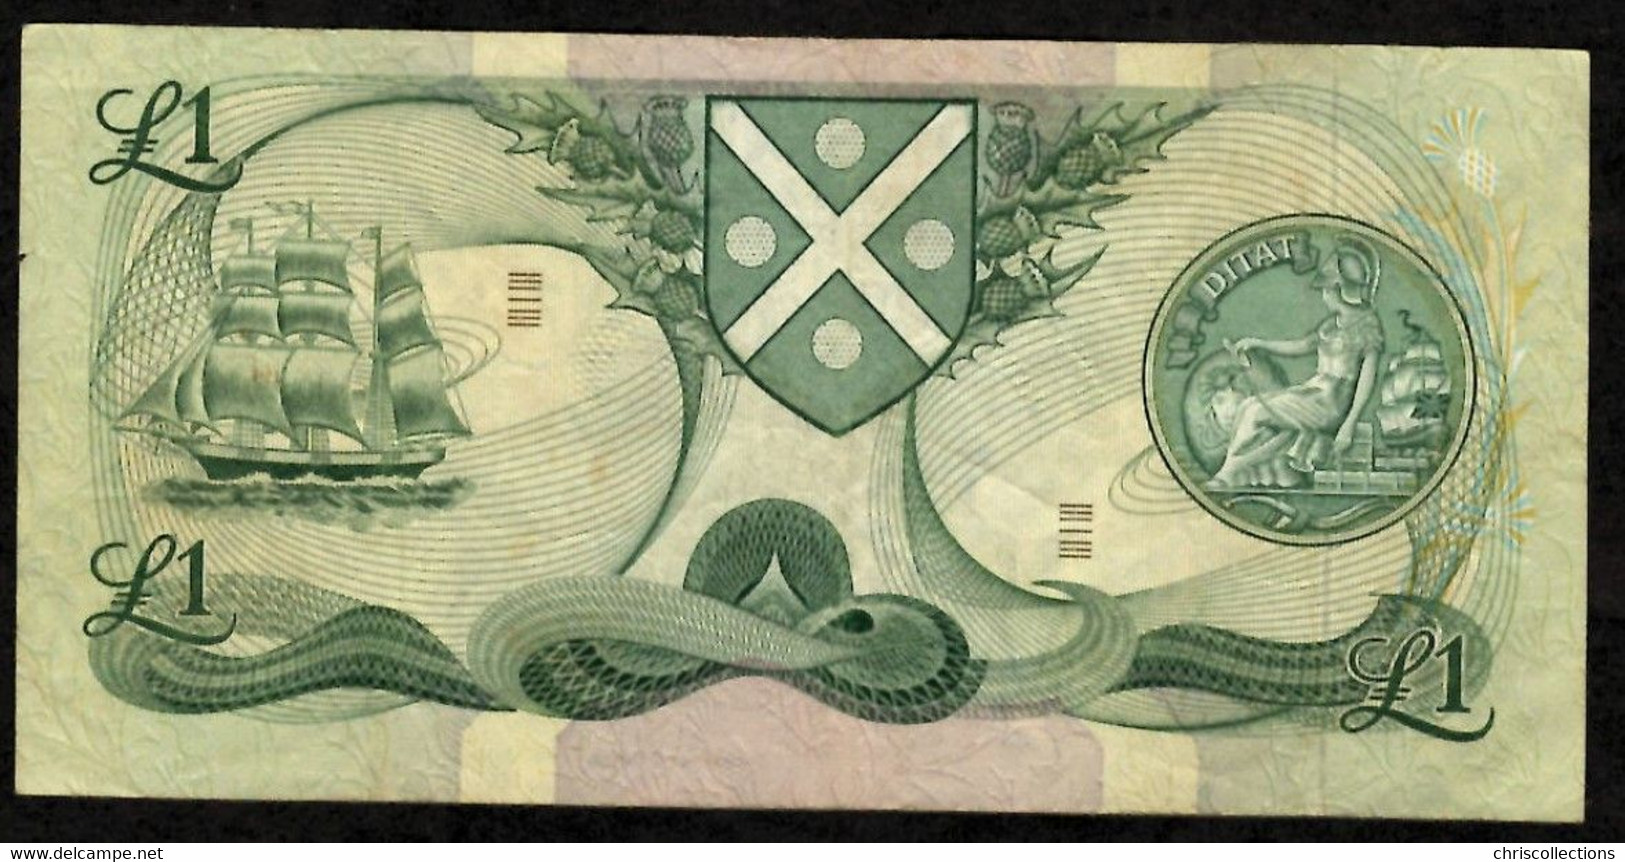 ECOSSE - 1 Pound Bank Of Scotland - 1977 - Pick 204 - 1 Pond